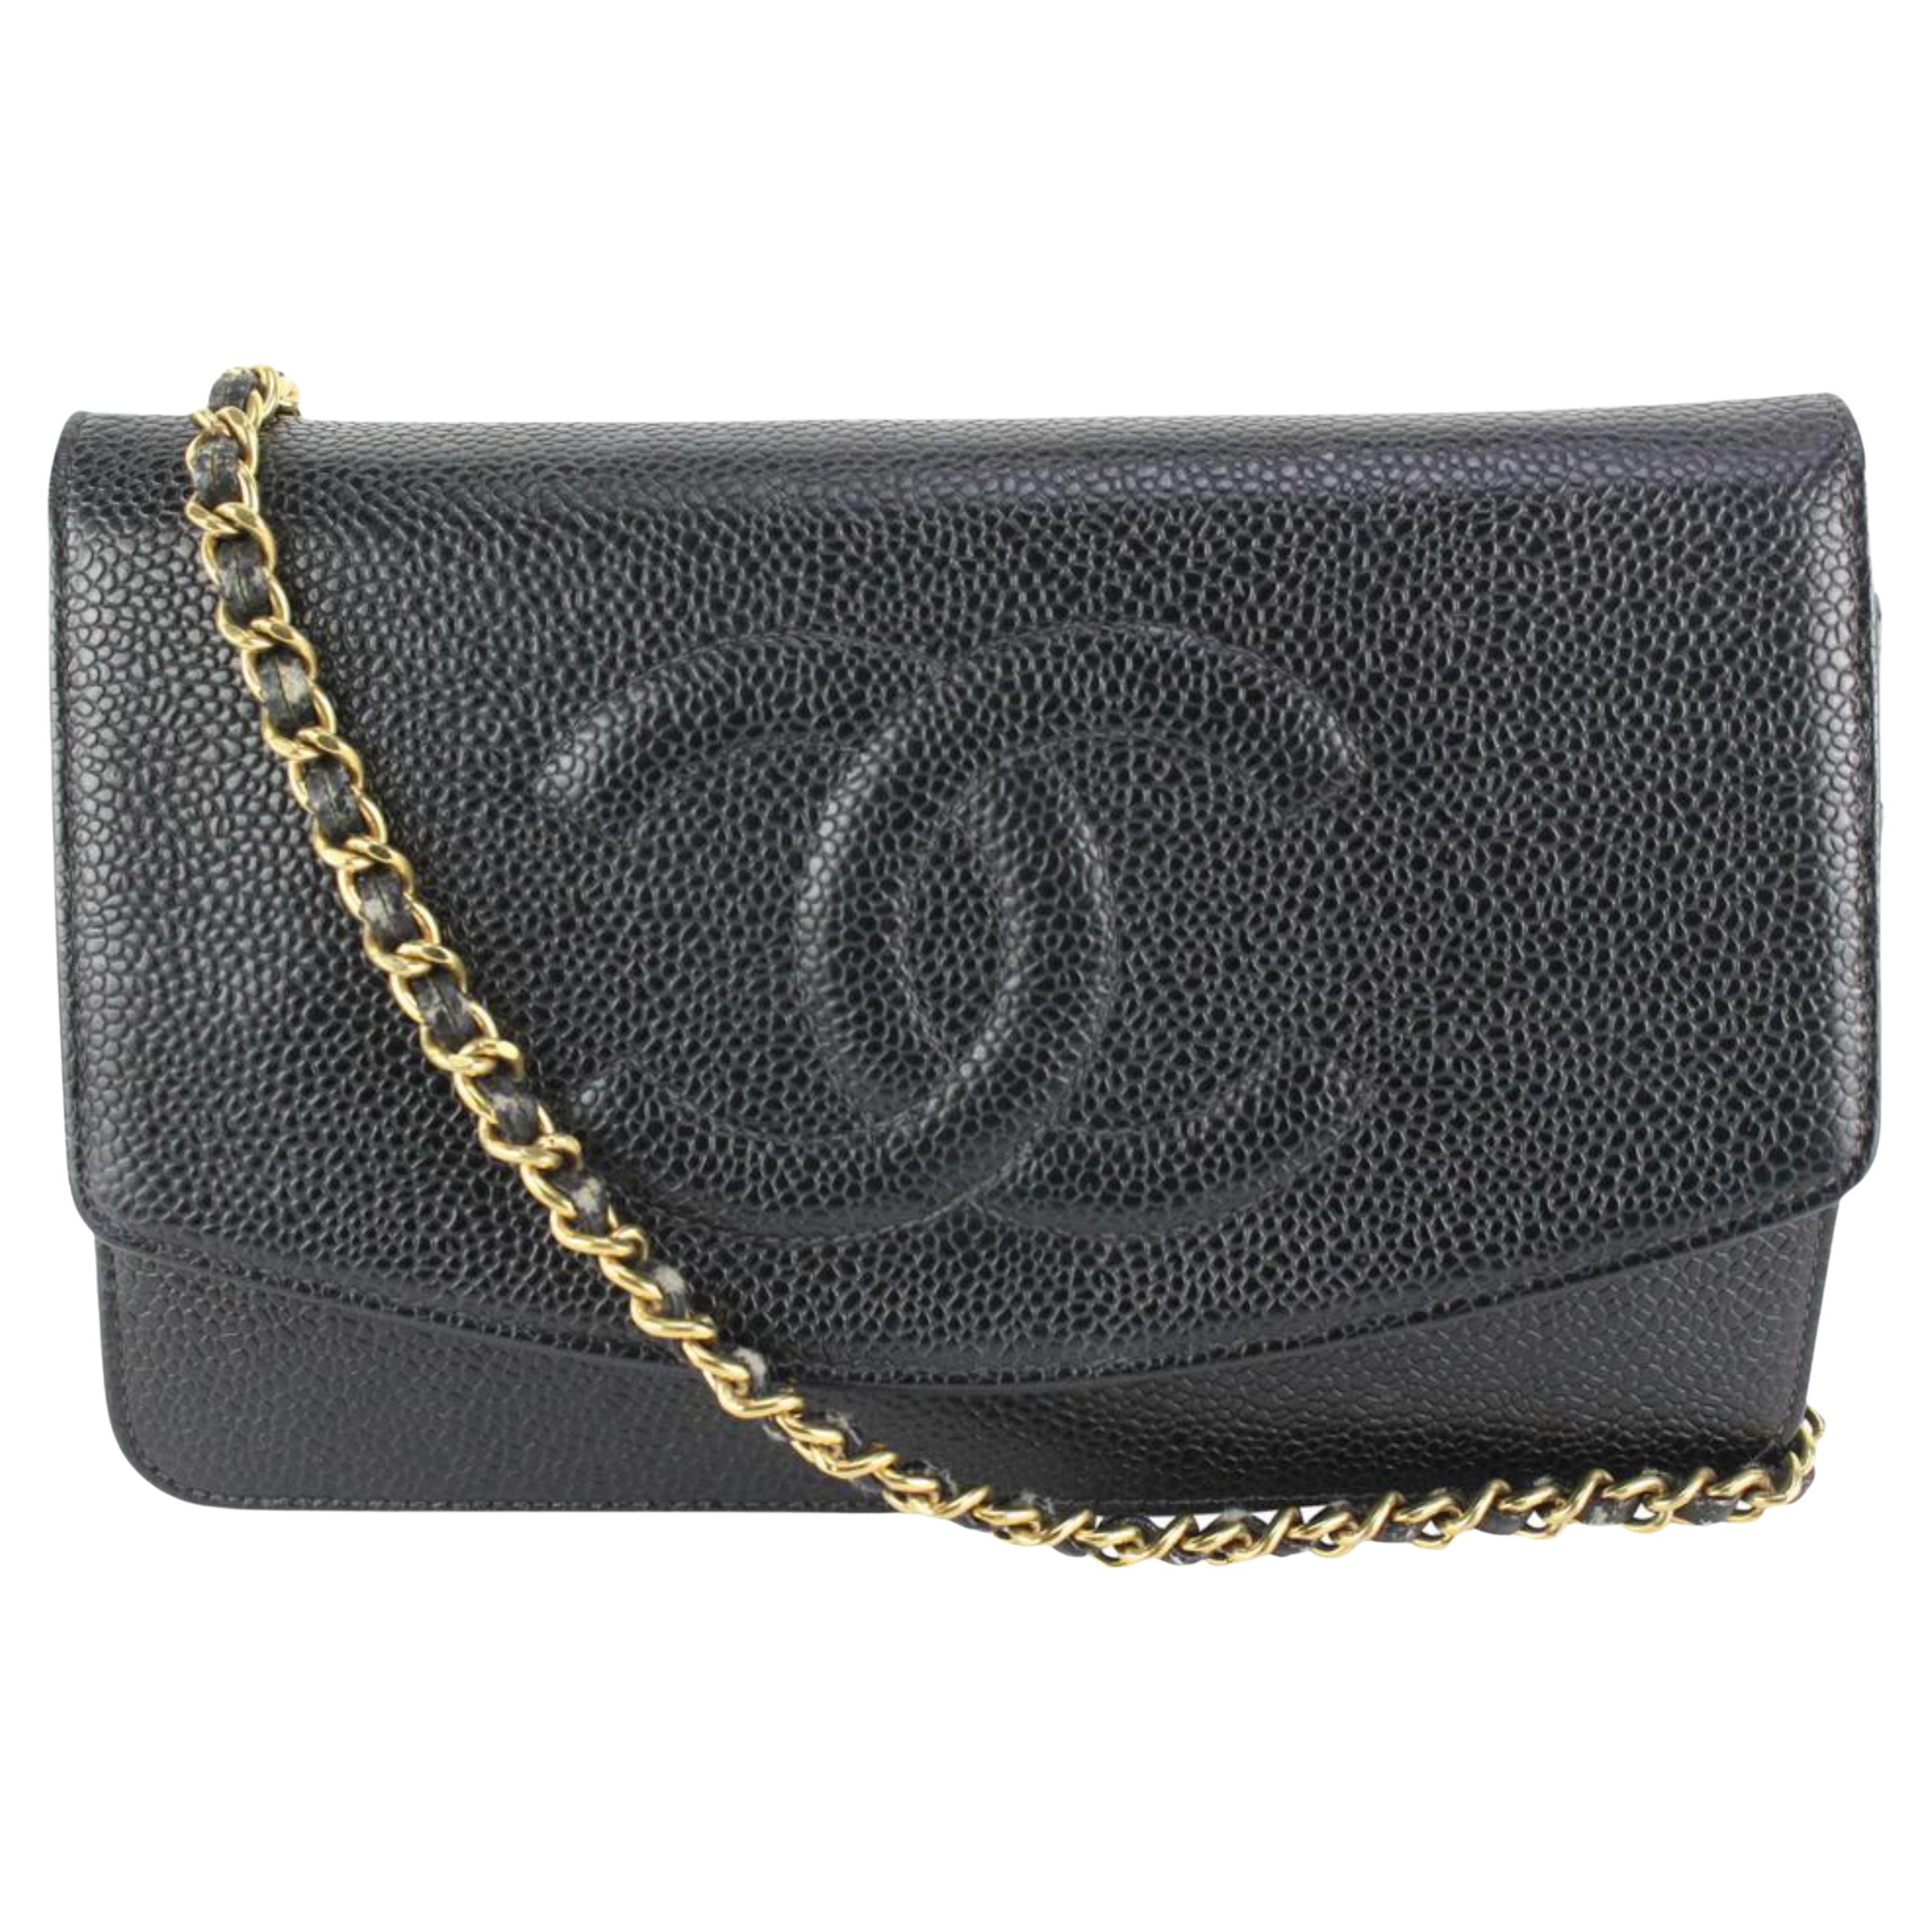 Chanel Black Caviar CC Logo Timeless Wallet on Chain Woc 61cz63s